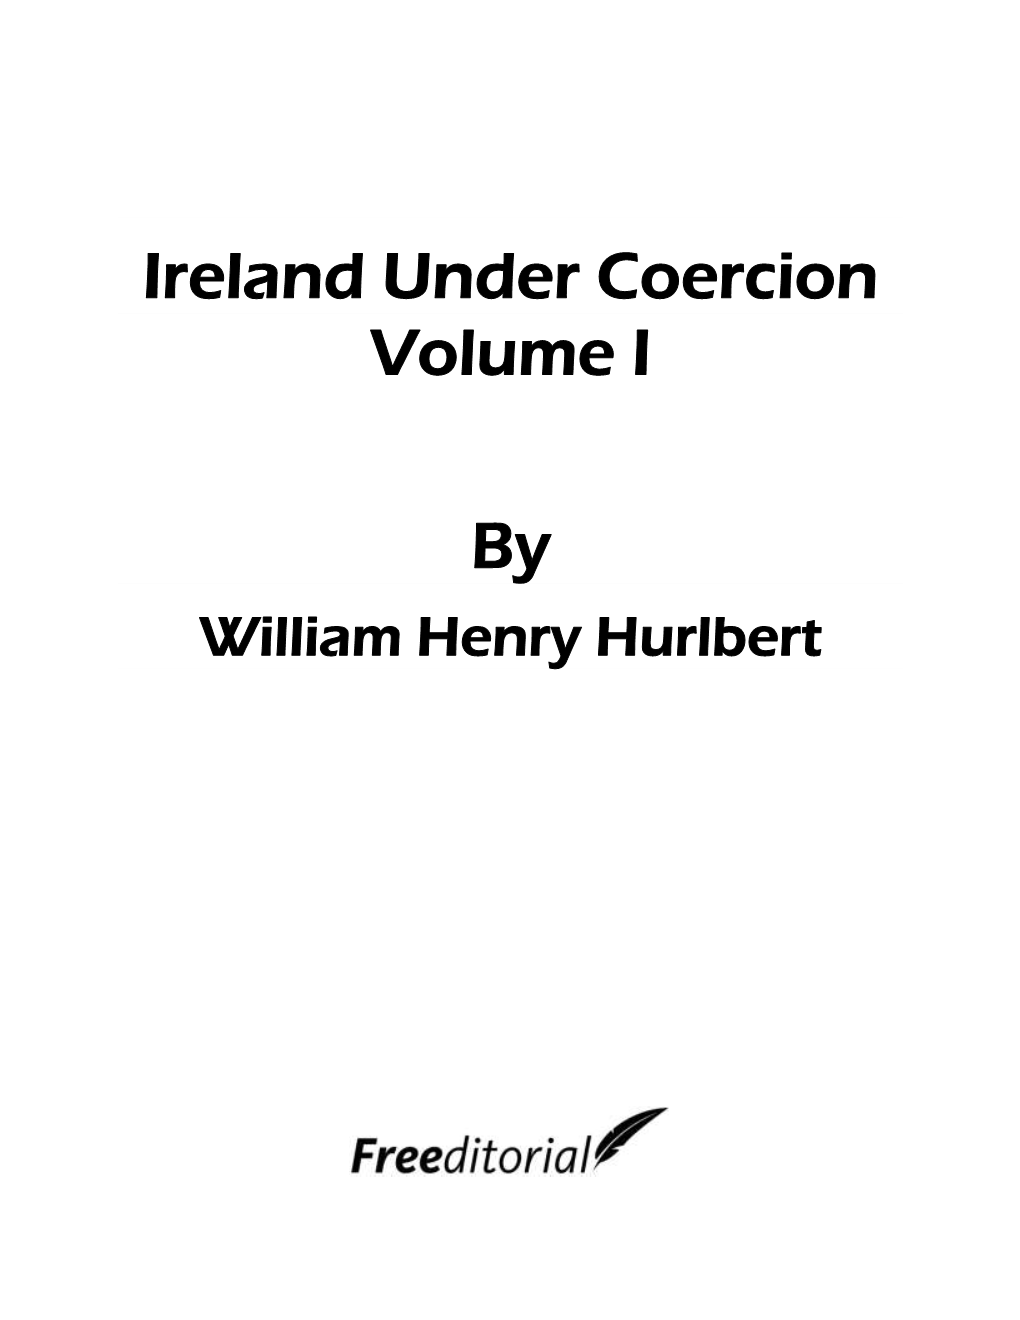 Ireland Under Coercion Volume I By